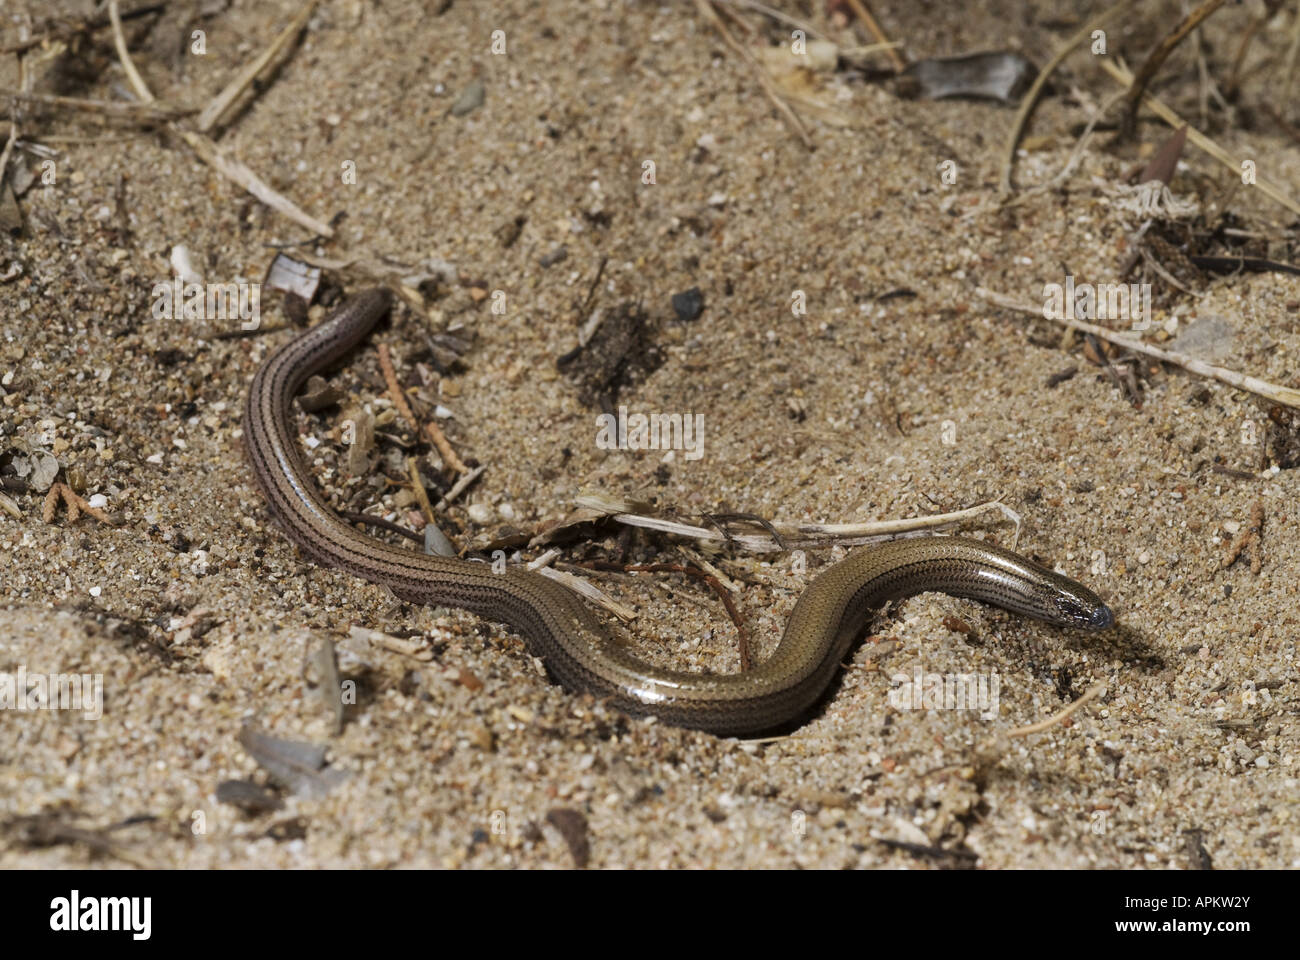 Greek legless skink, Greek snake skink (Ophiomorus punctatissimus), on sand, Greece, Peloponnes, Messinien, Pylos Stock Photo